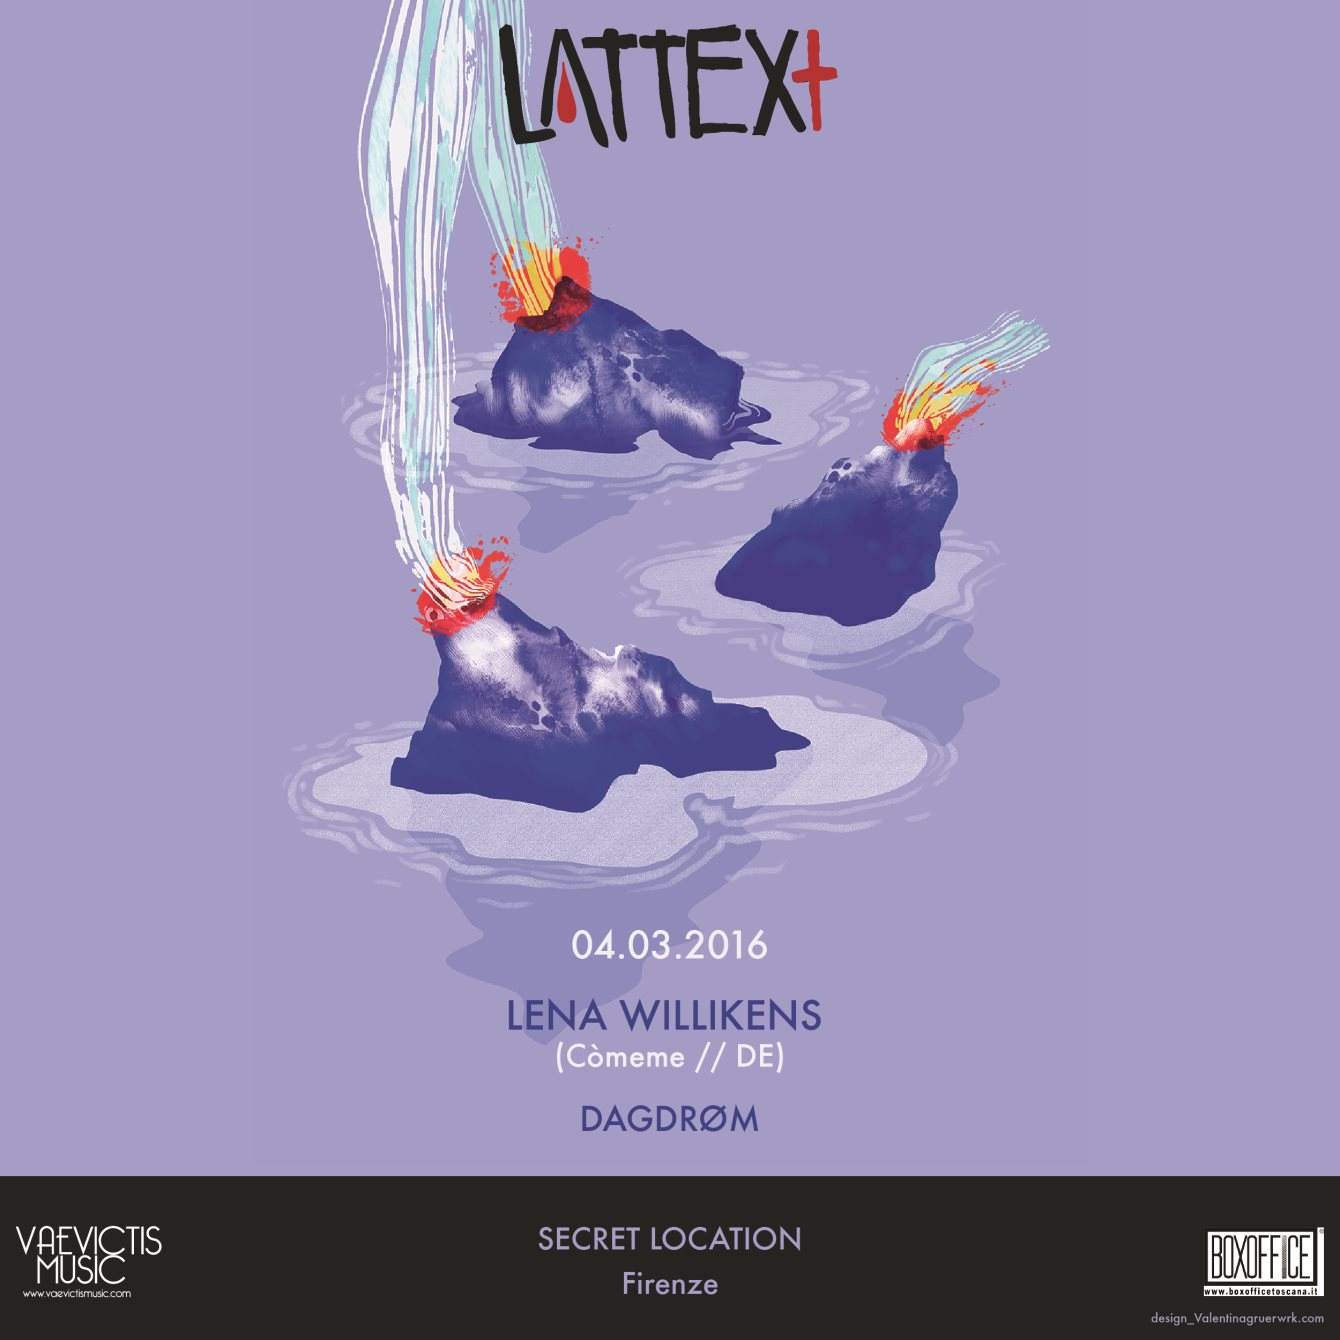 Lattex with Lena Willikens - フライヤー表